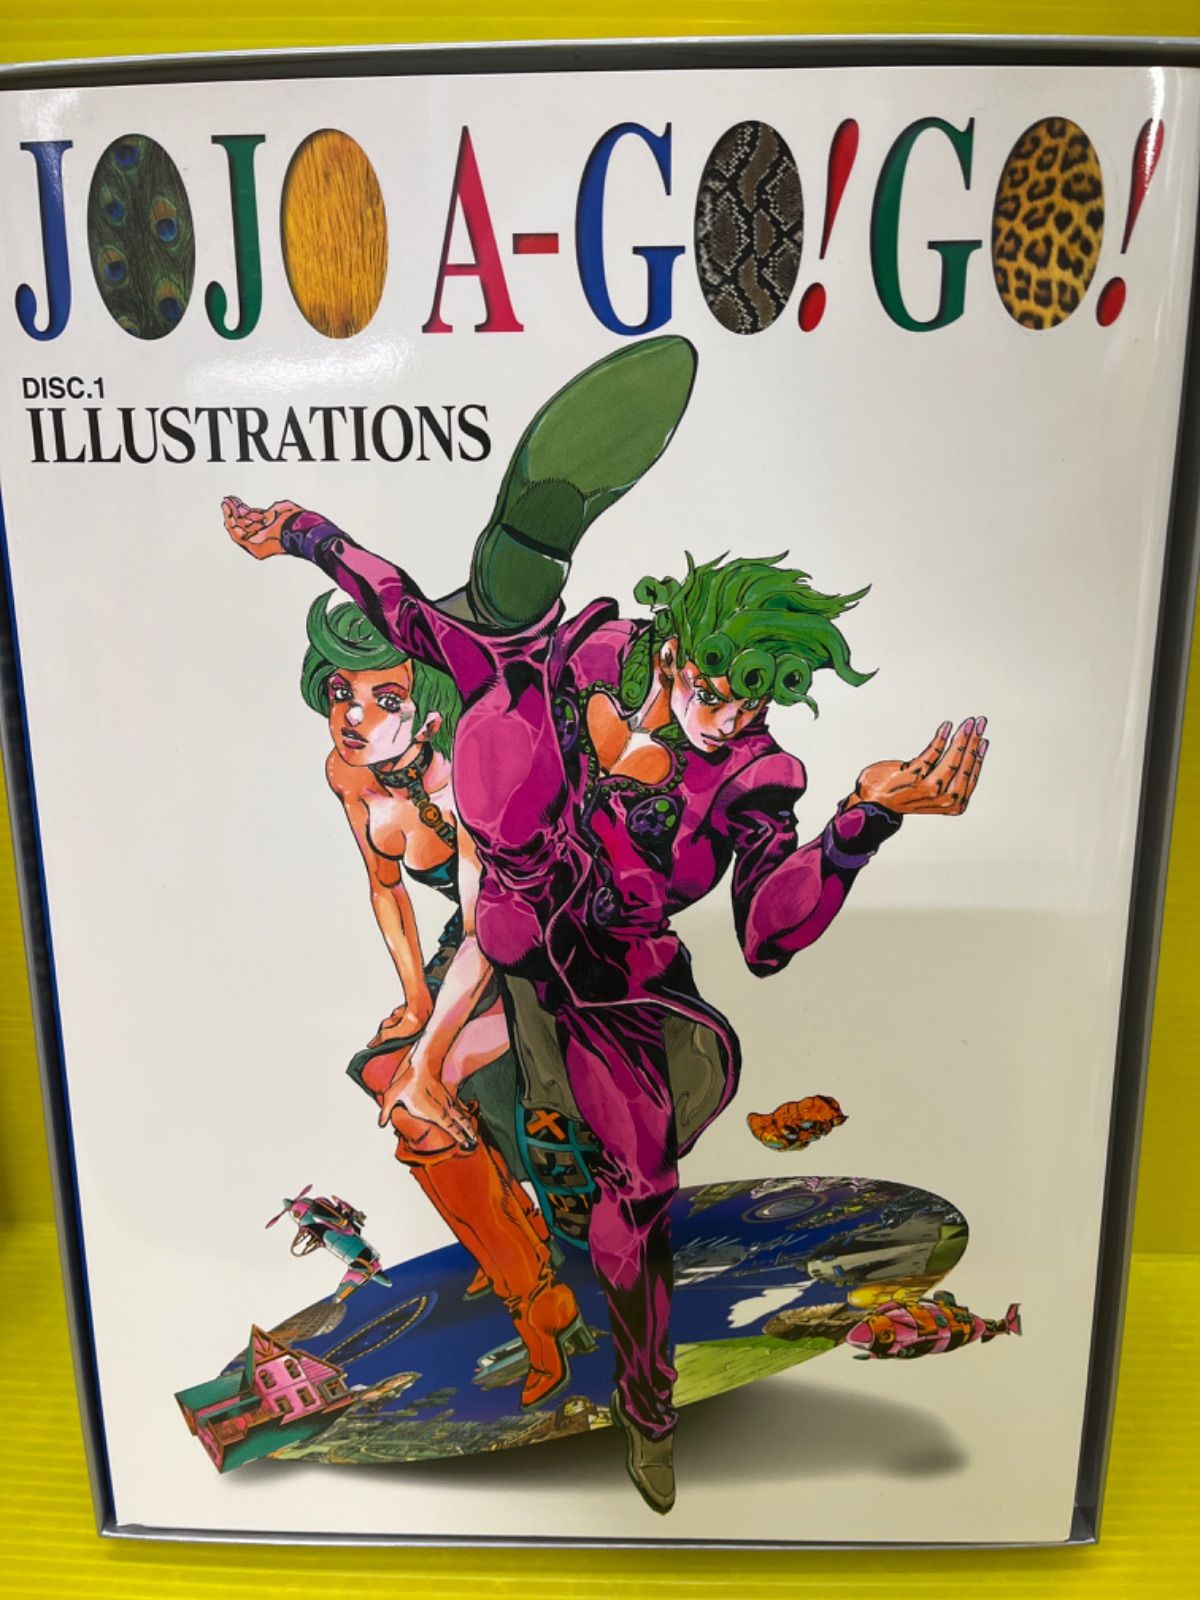 Jojo A-go!go! ジョジョの奇妙な冒険 イラスト集 荒木飛呂彦 - メルカリ